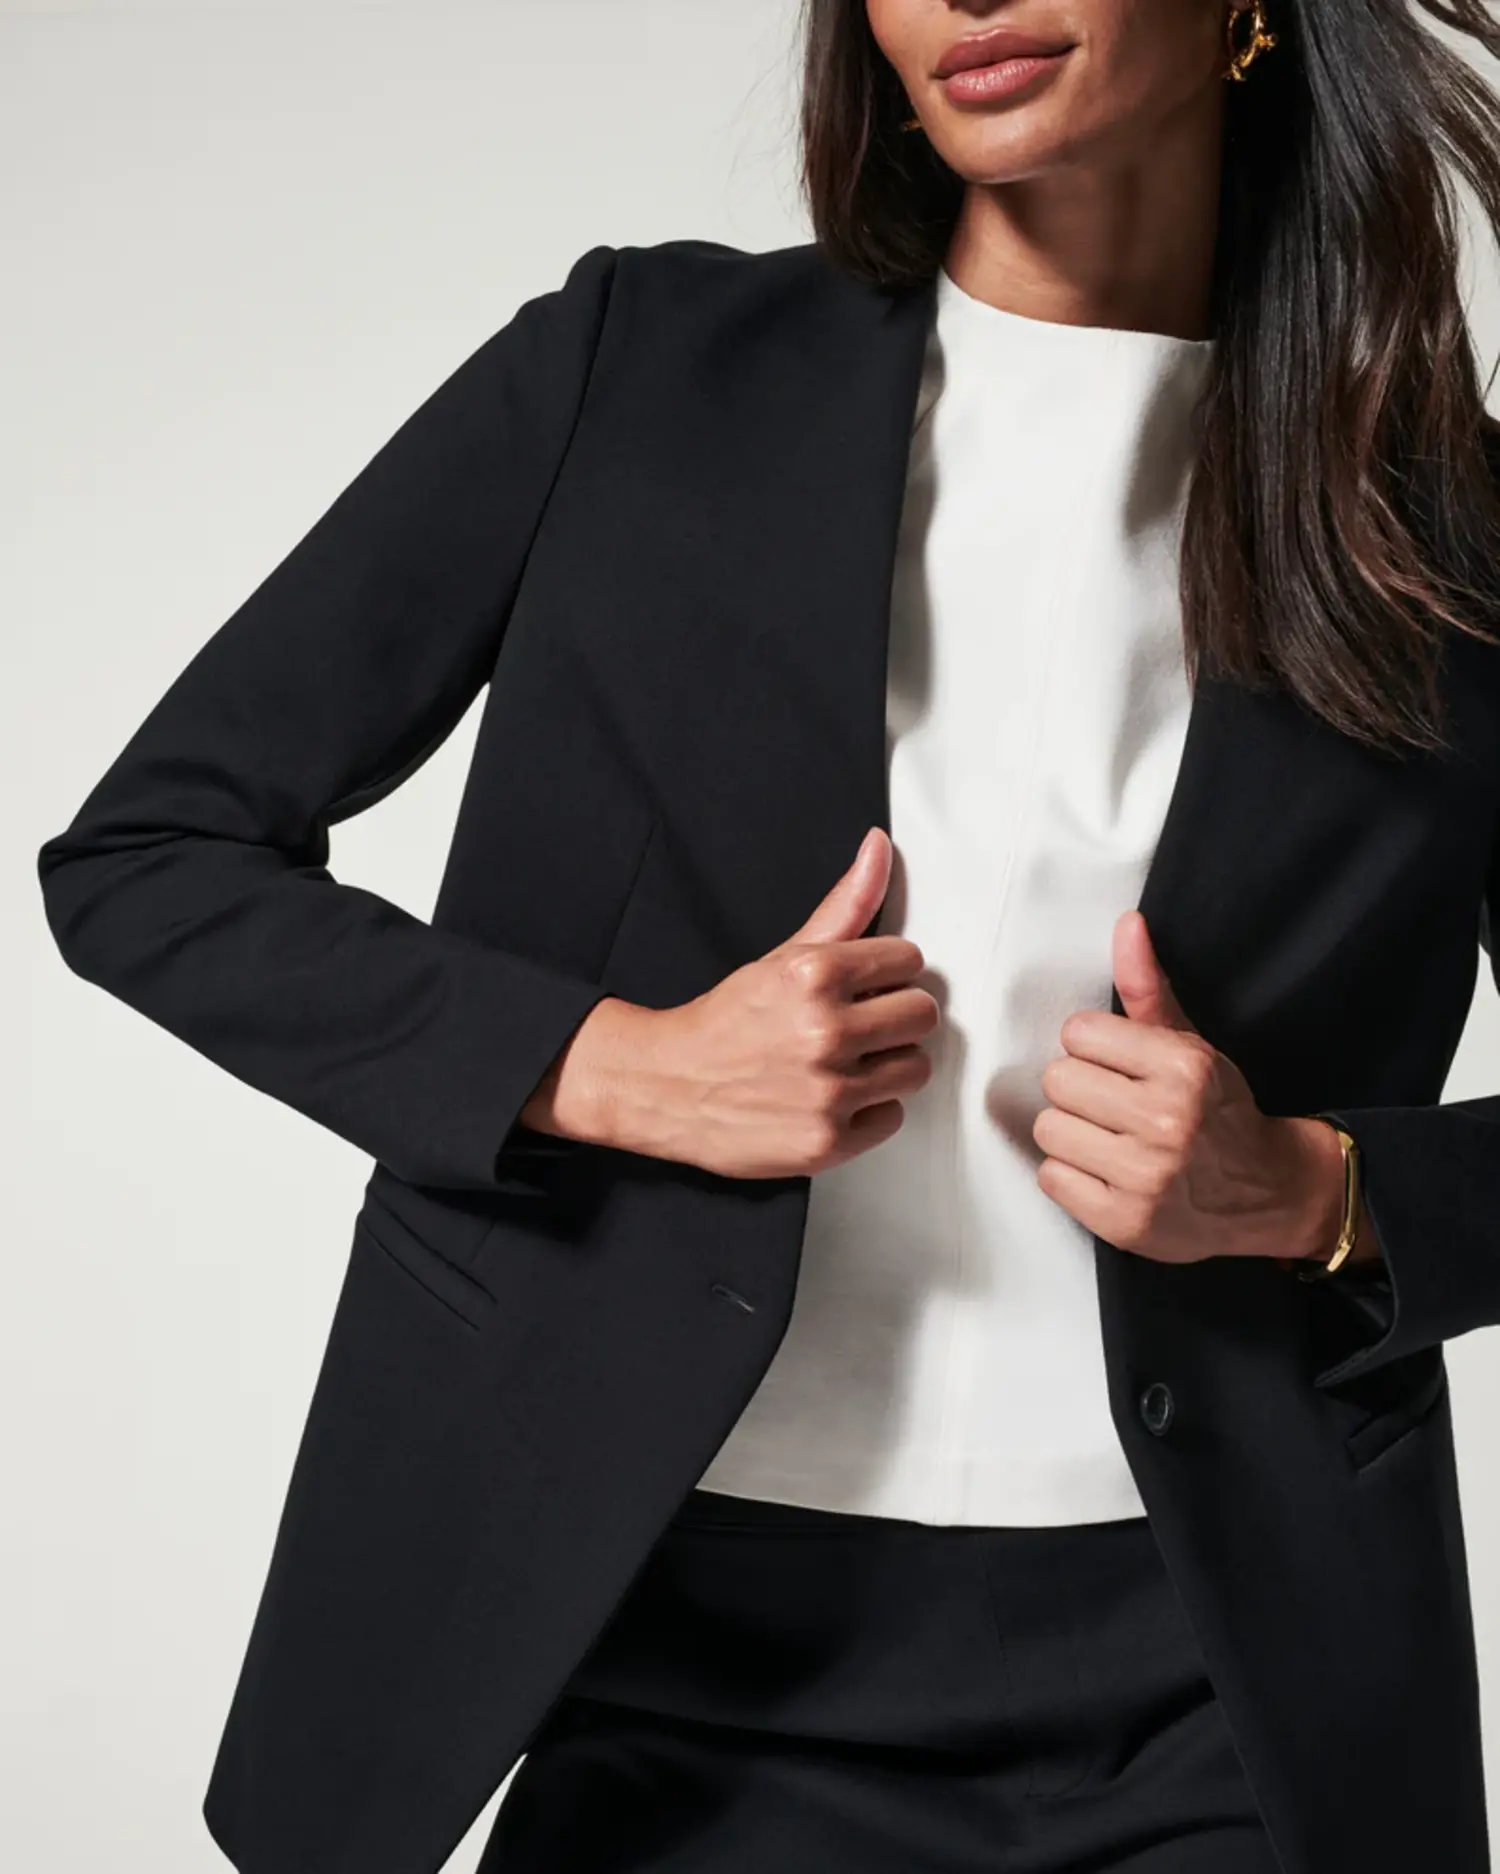 SPANX, Jackets & Coats, Spanx The Perfect Oversized Blazer Classic Black